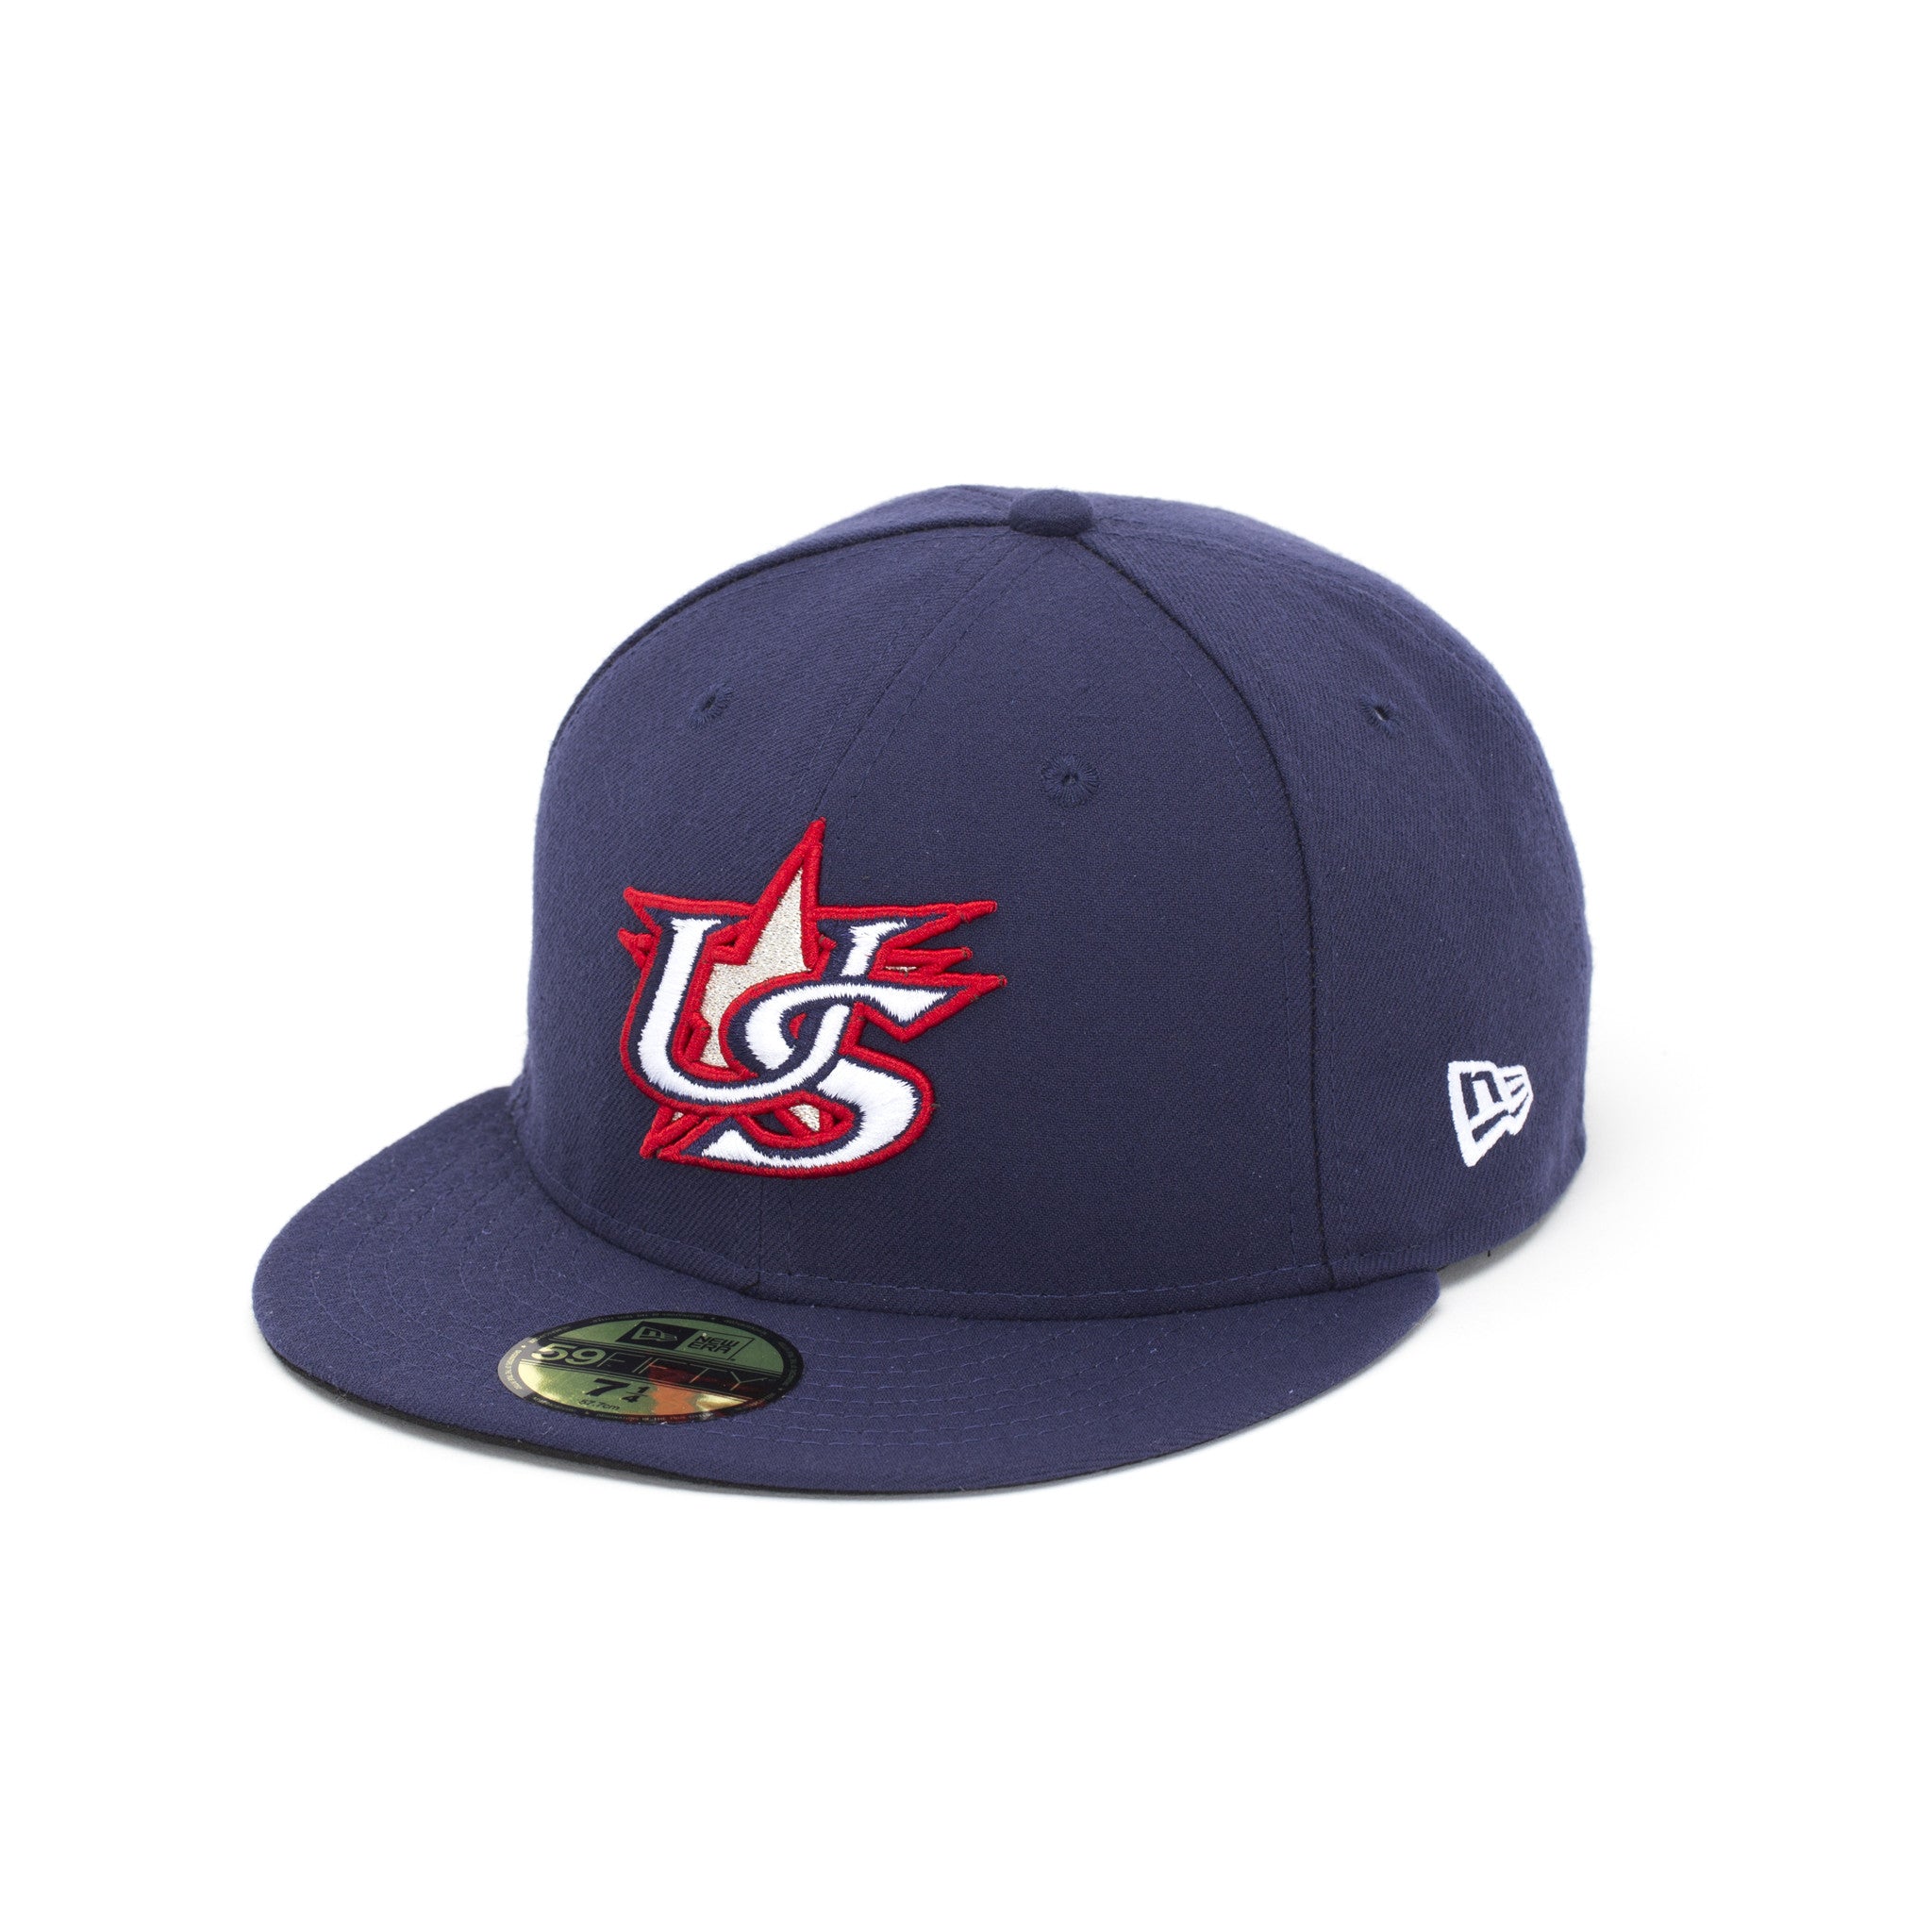 Home Cap 59FIFTY | USA Baseball Shop